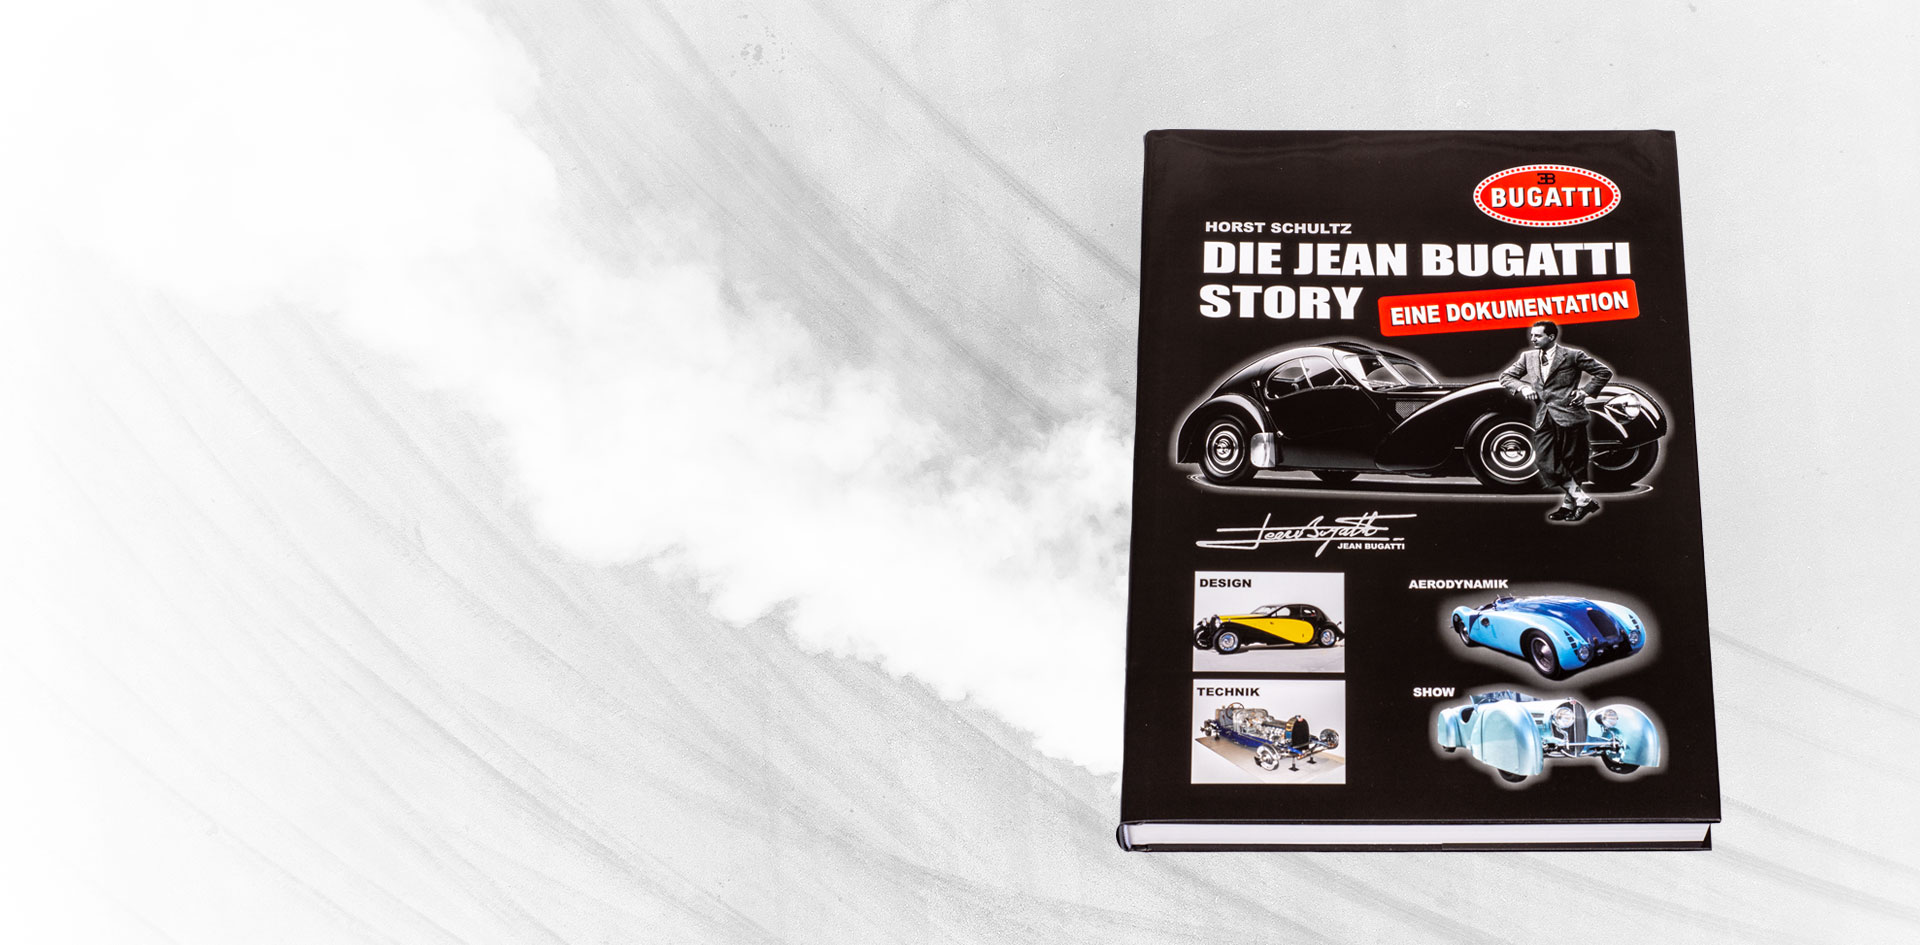 Die Jean Bugatti Story